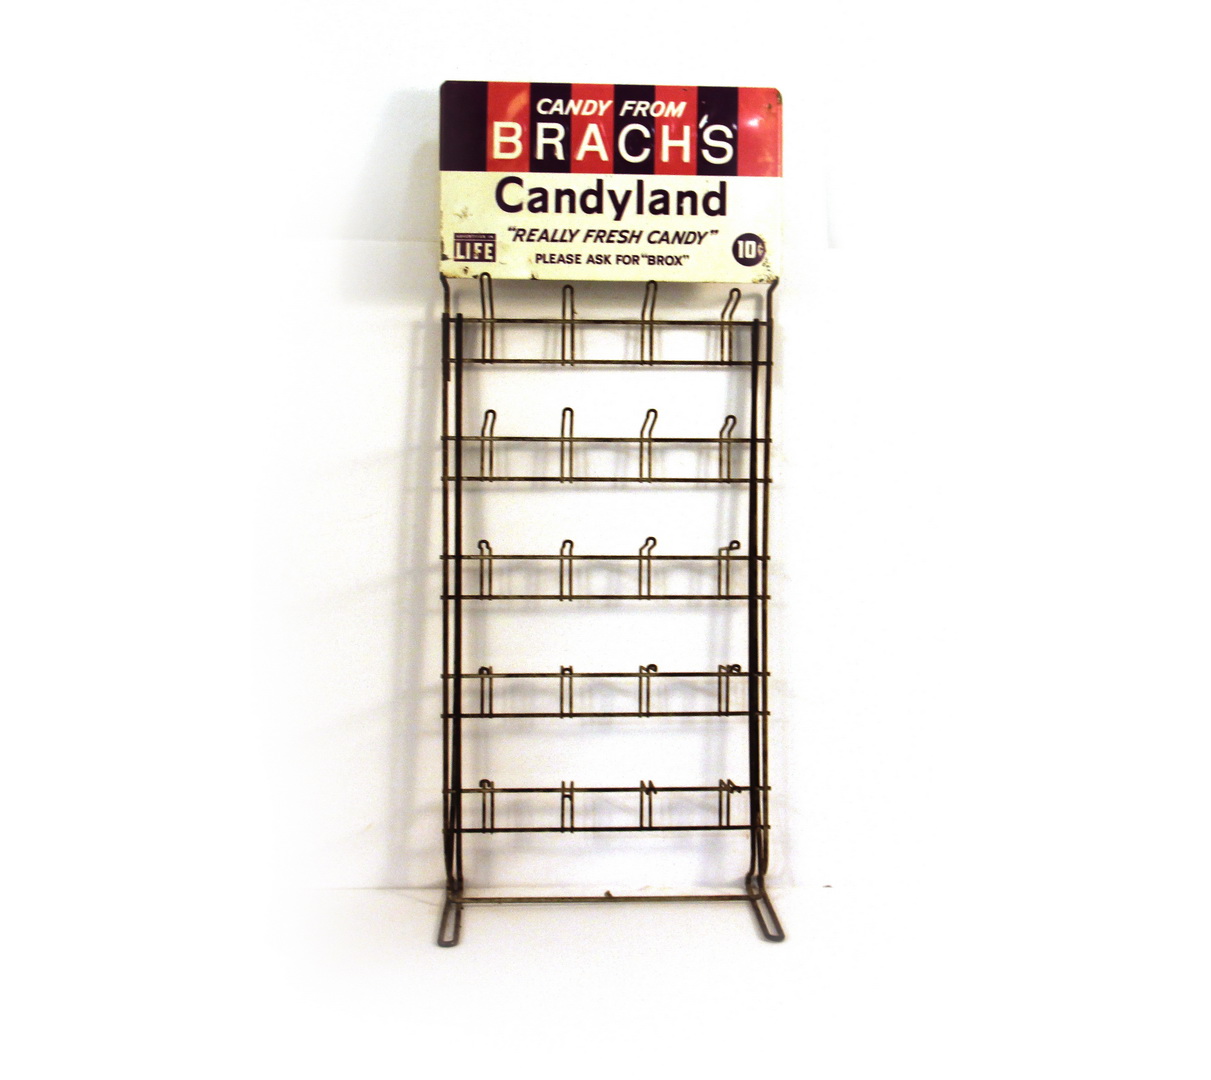 Vintage Brach's Candy Display Sign